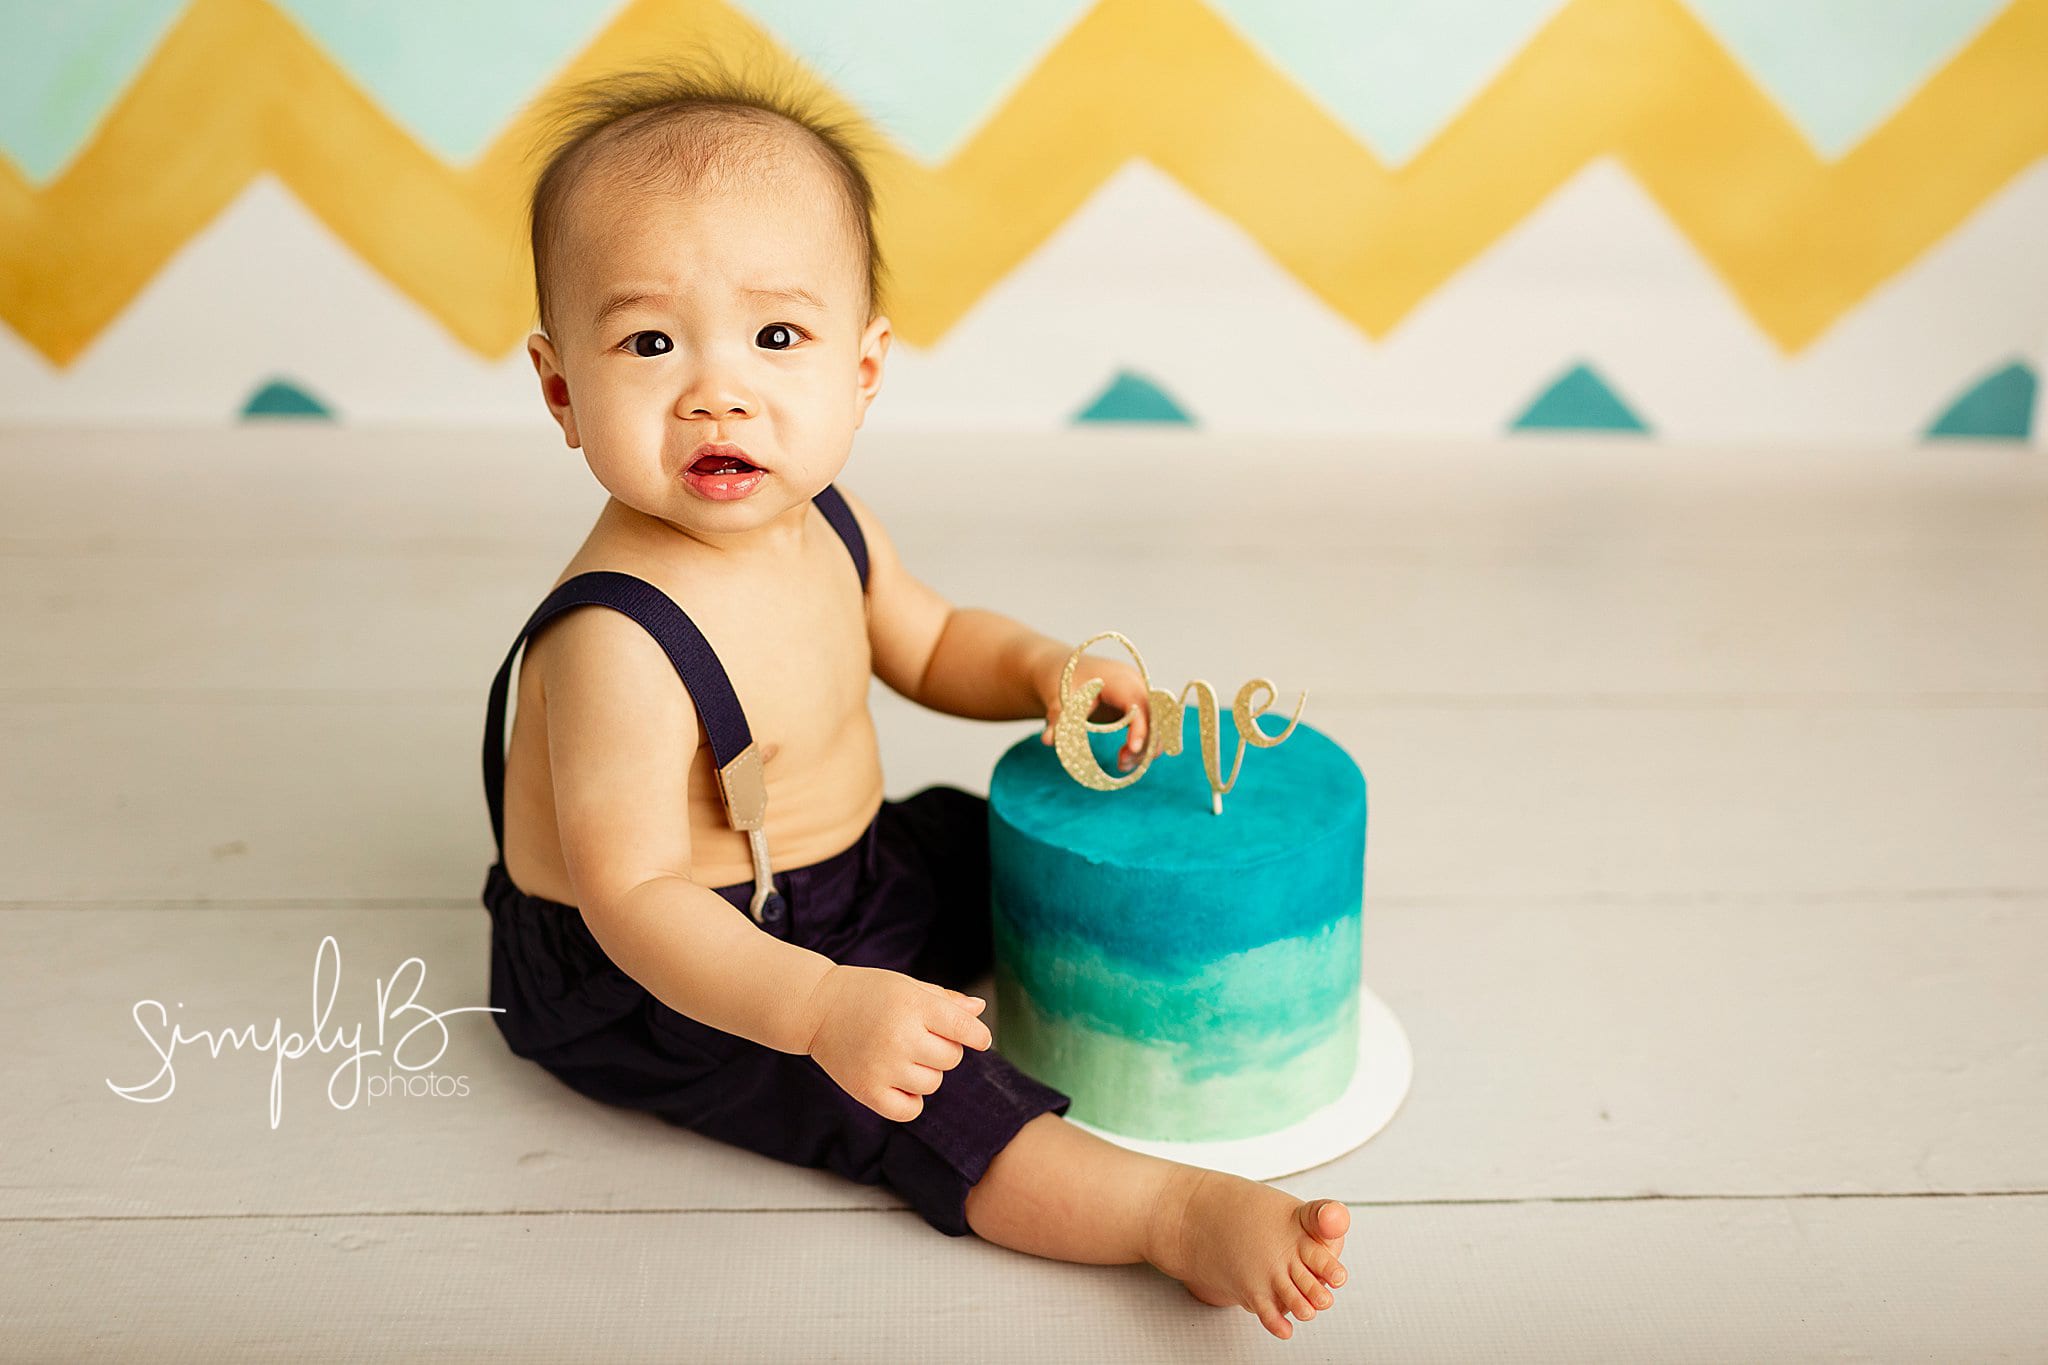 edmonton cake smash photographer baby boy